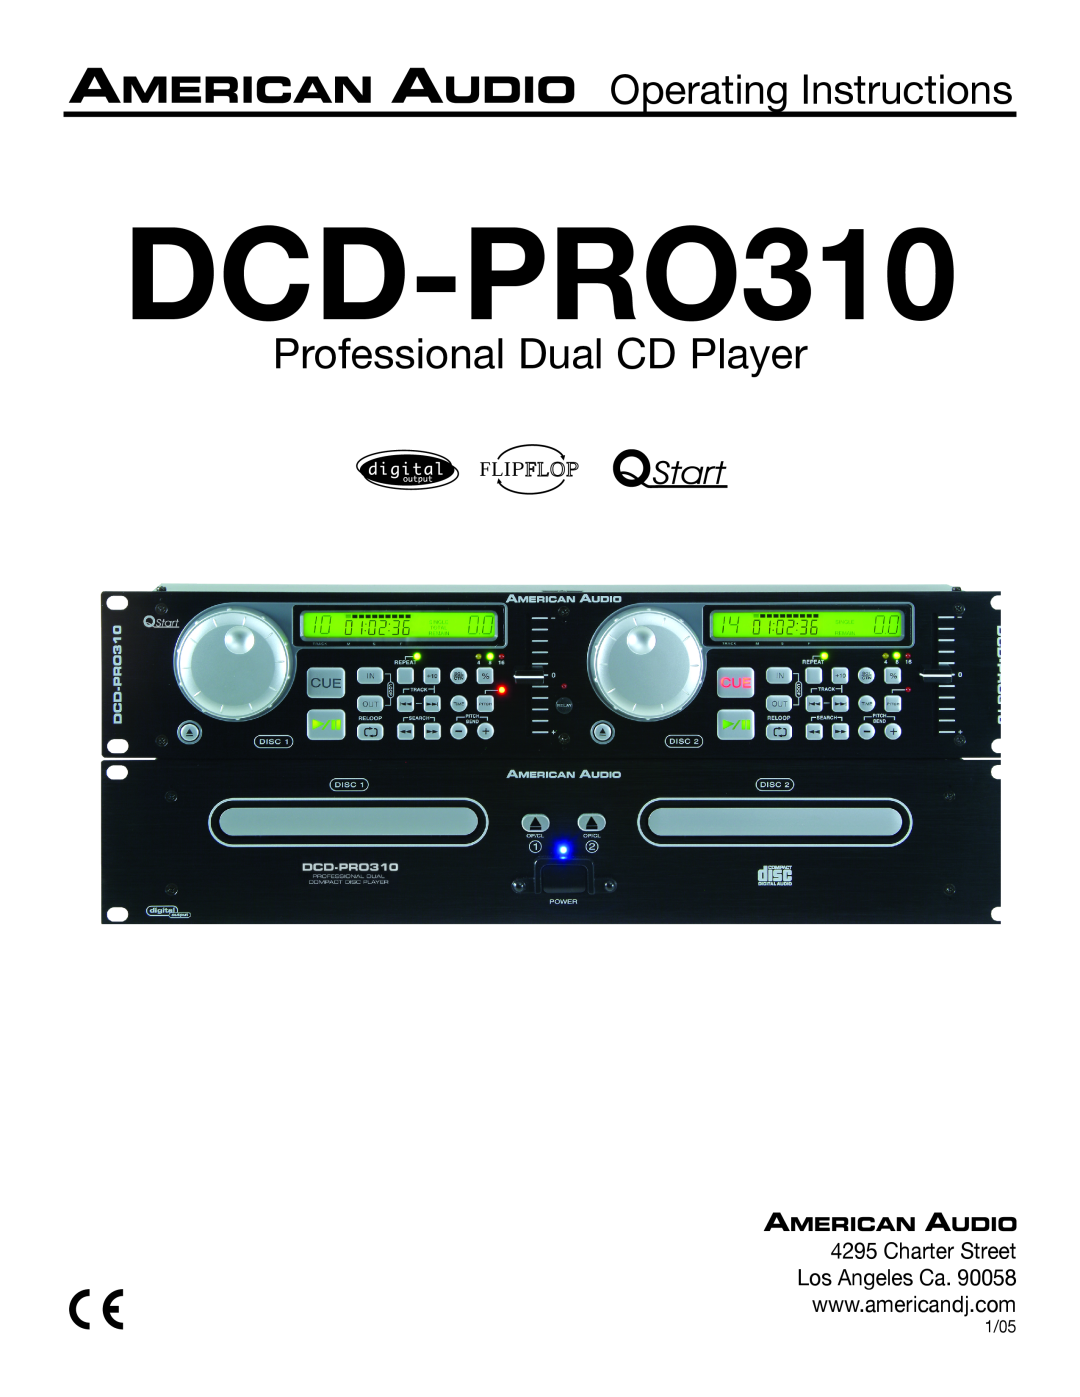 American Audio DCD-PRO310 operating instructions Professional Dual CD Player, Operating Instructions, Flipflop 